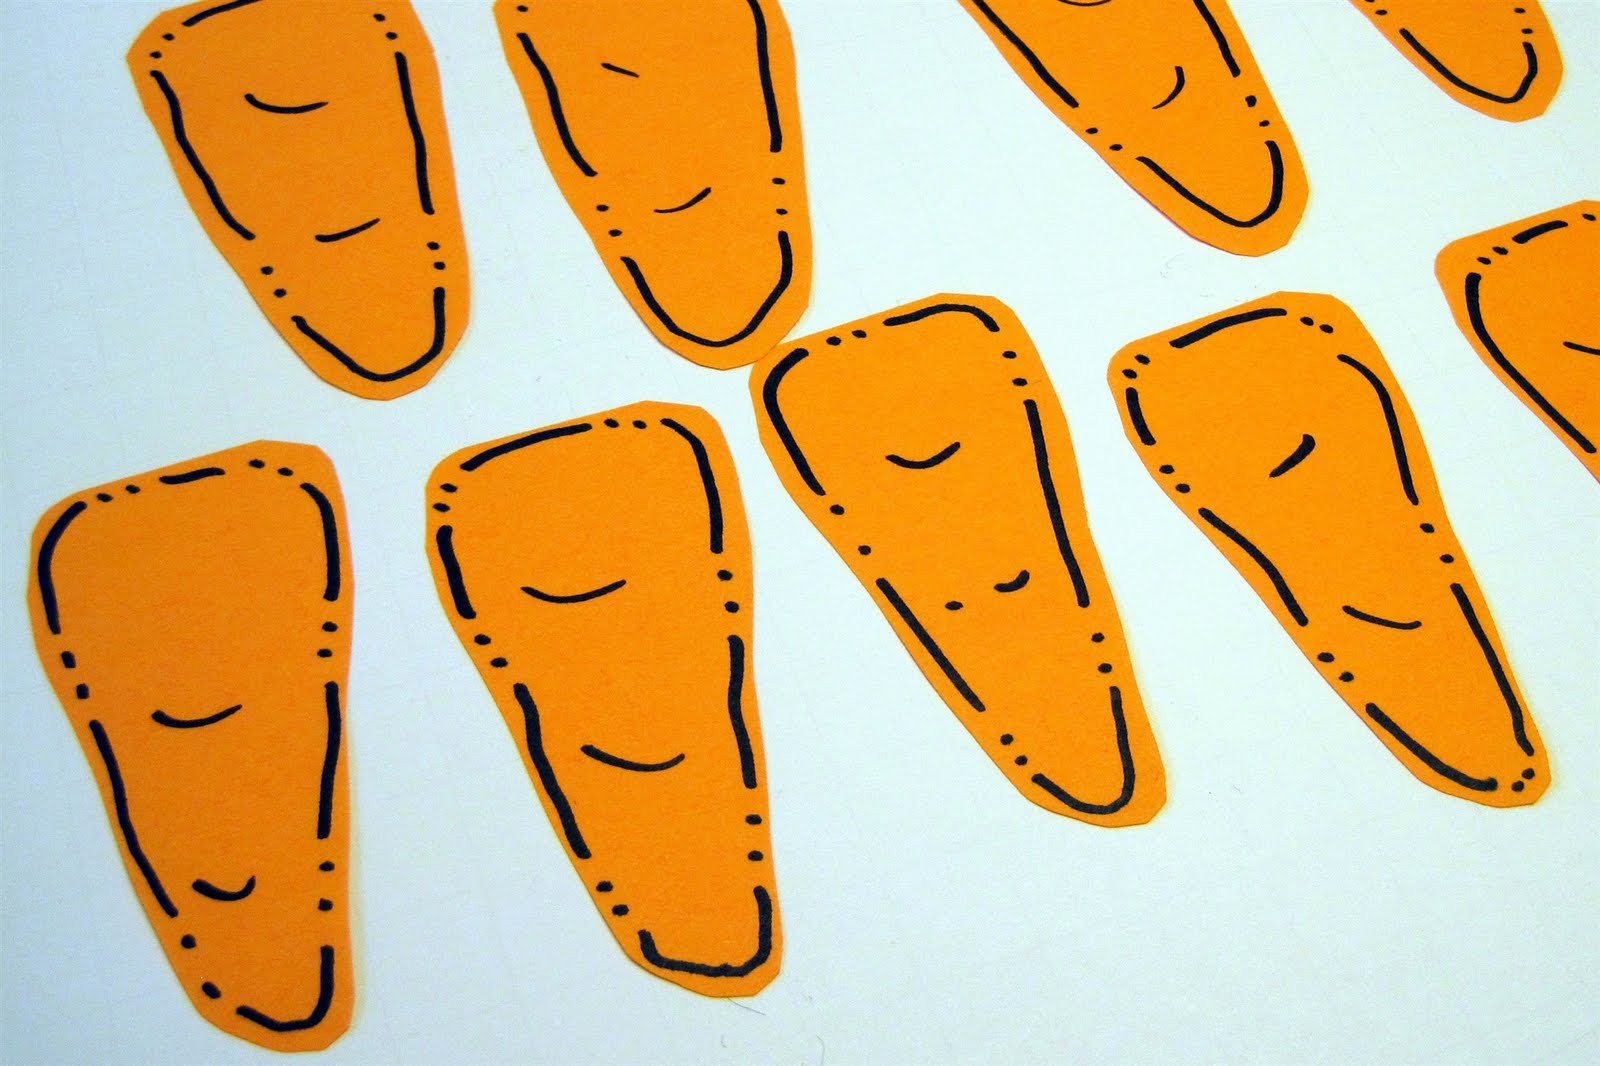 Carrot Nose Printable Artfully Arranged Disarray Cute Snowman Game